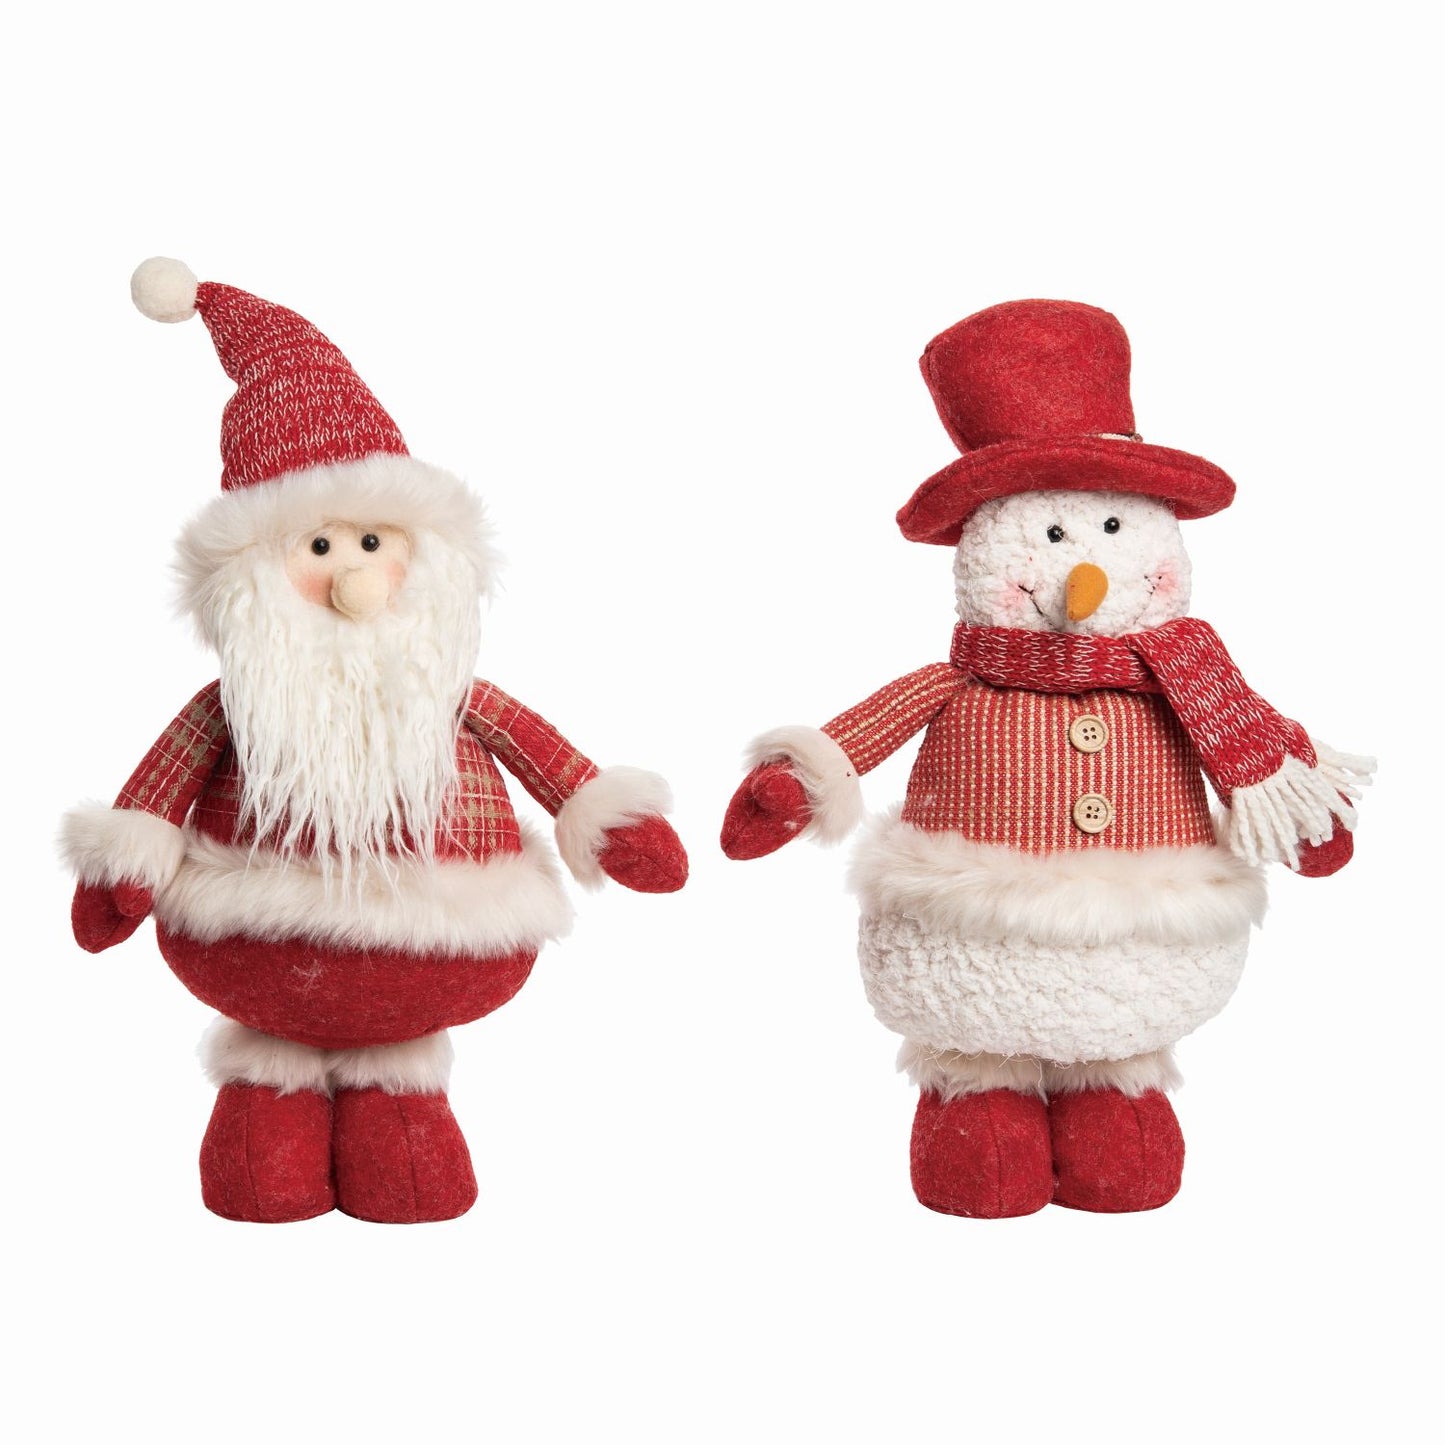 Transpac Plush Holiday Standing Santa & Snowman, Set Of 2, Assortment